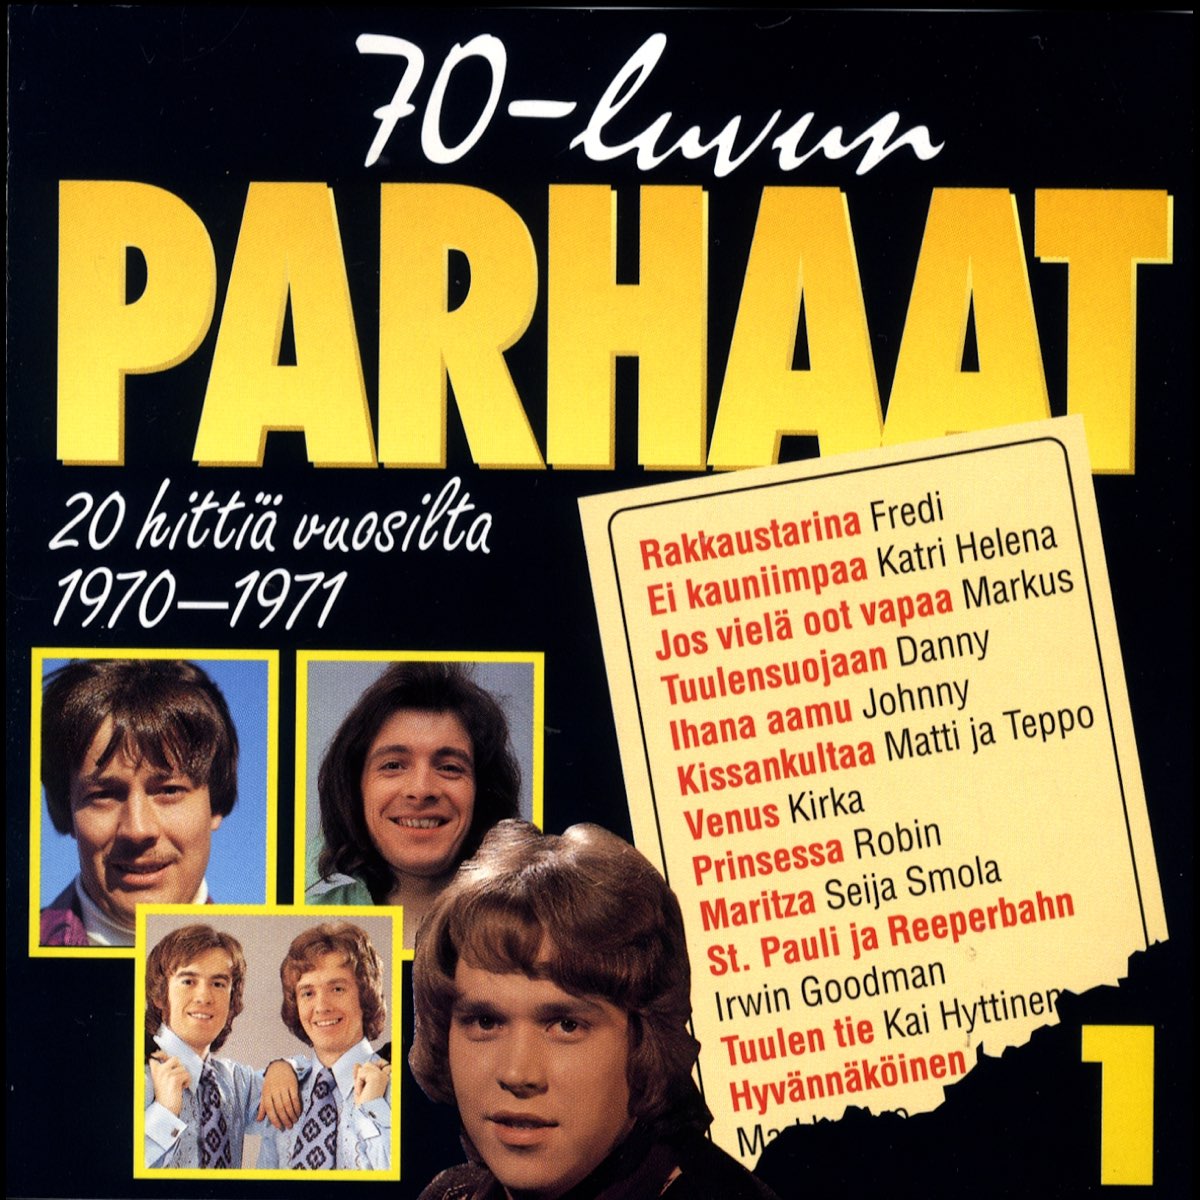 70-Luvun parhaat 1 1970-1971 by Various Artists on Apple Music